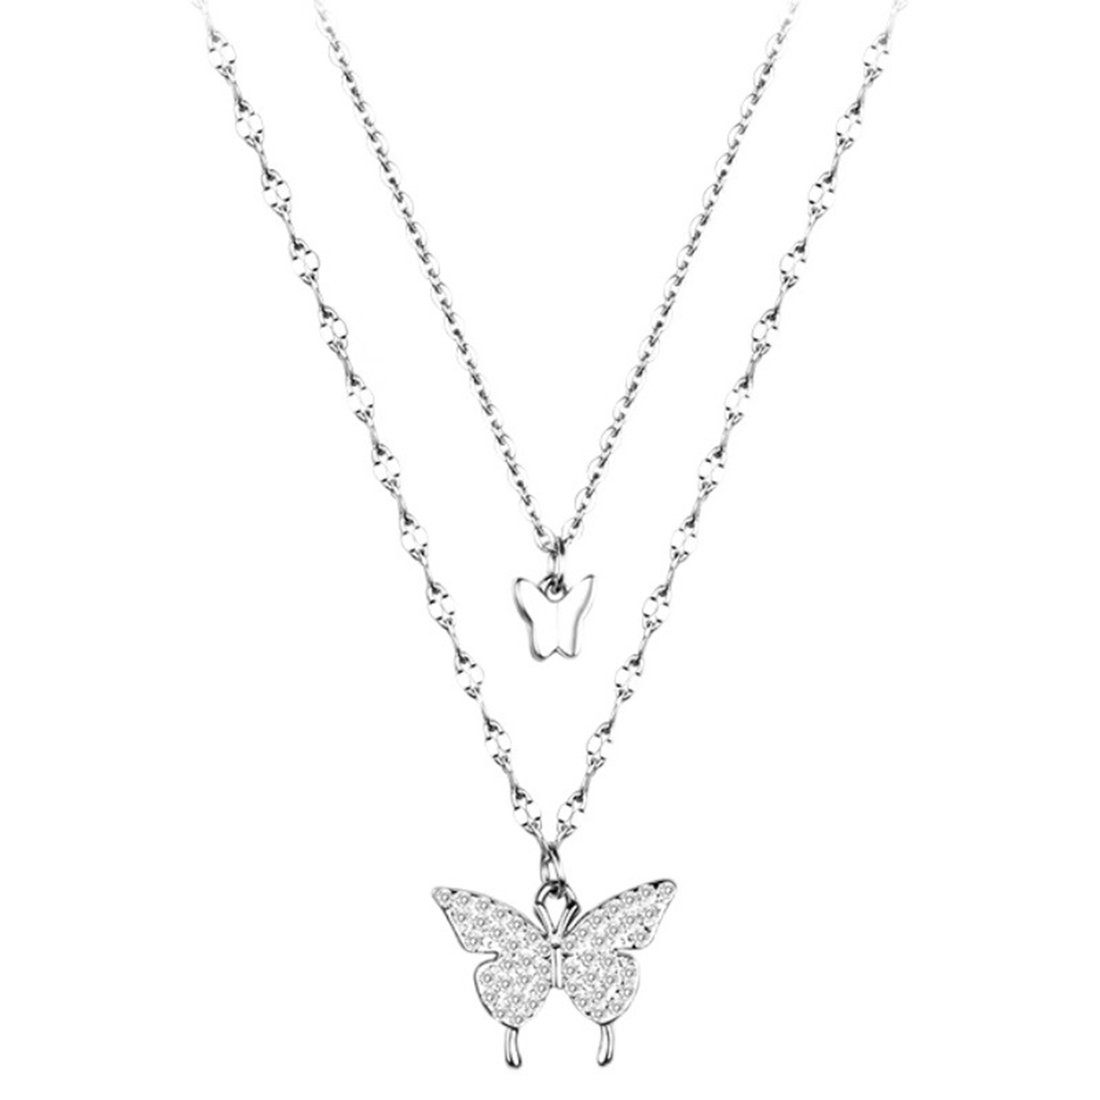 Haiaveng Kette mit Anhänger Schmetterling Anhänger Halskette, Silber Kristall Anhänger Halskette